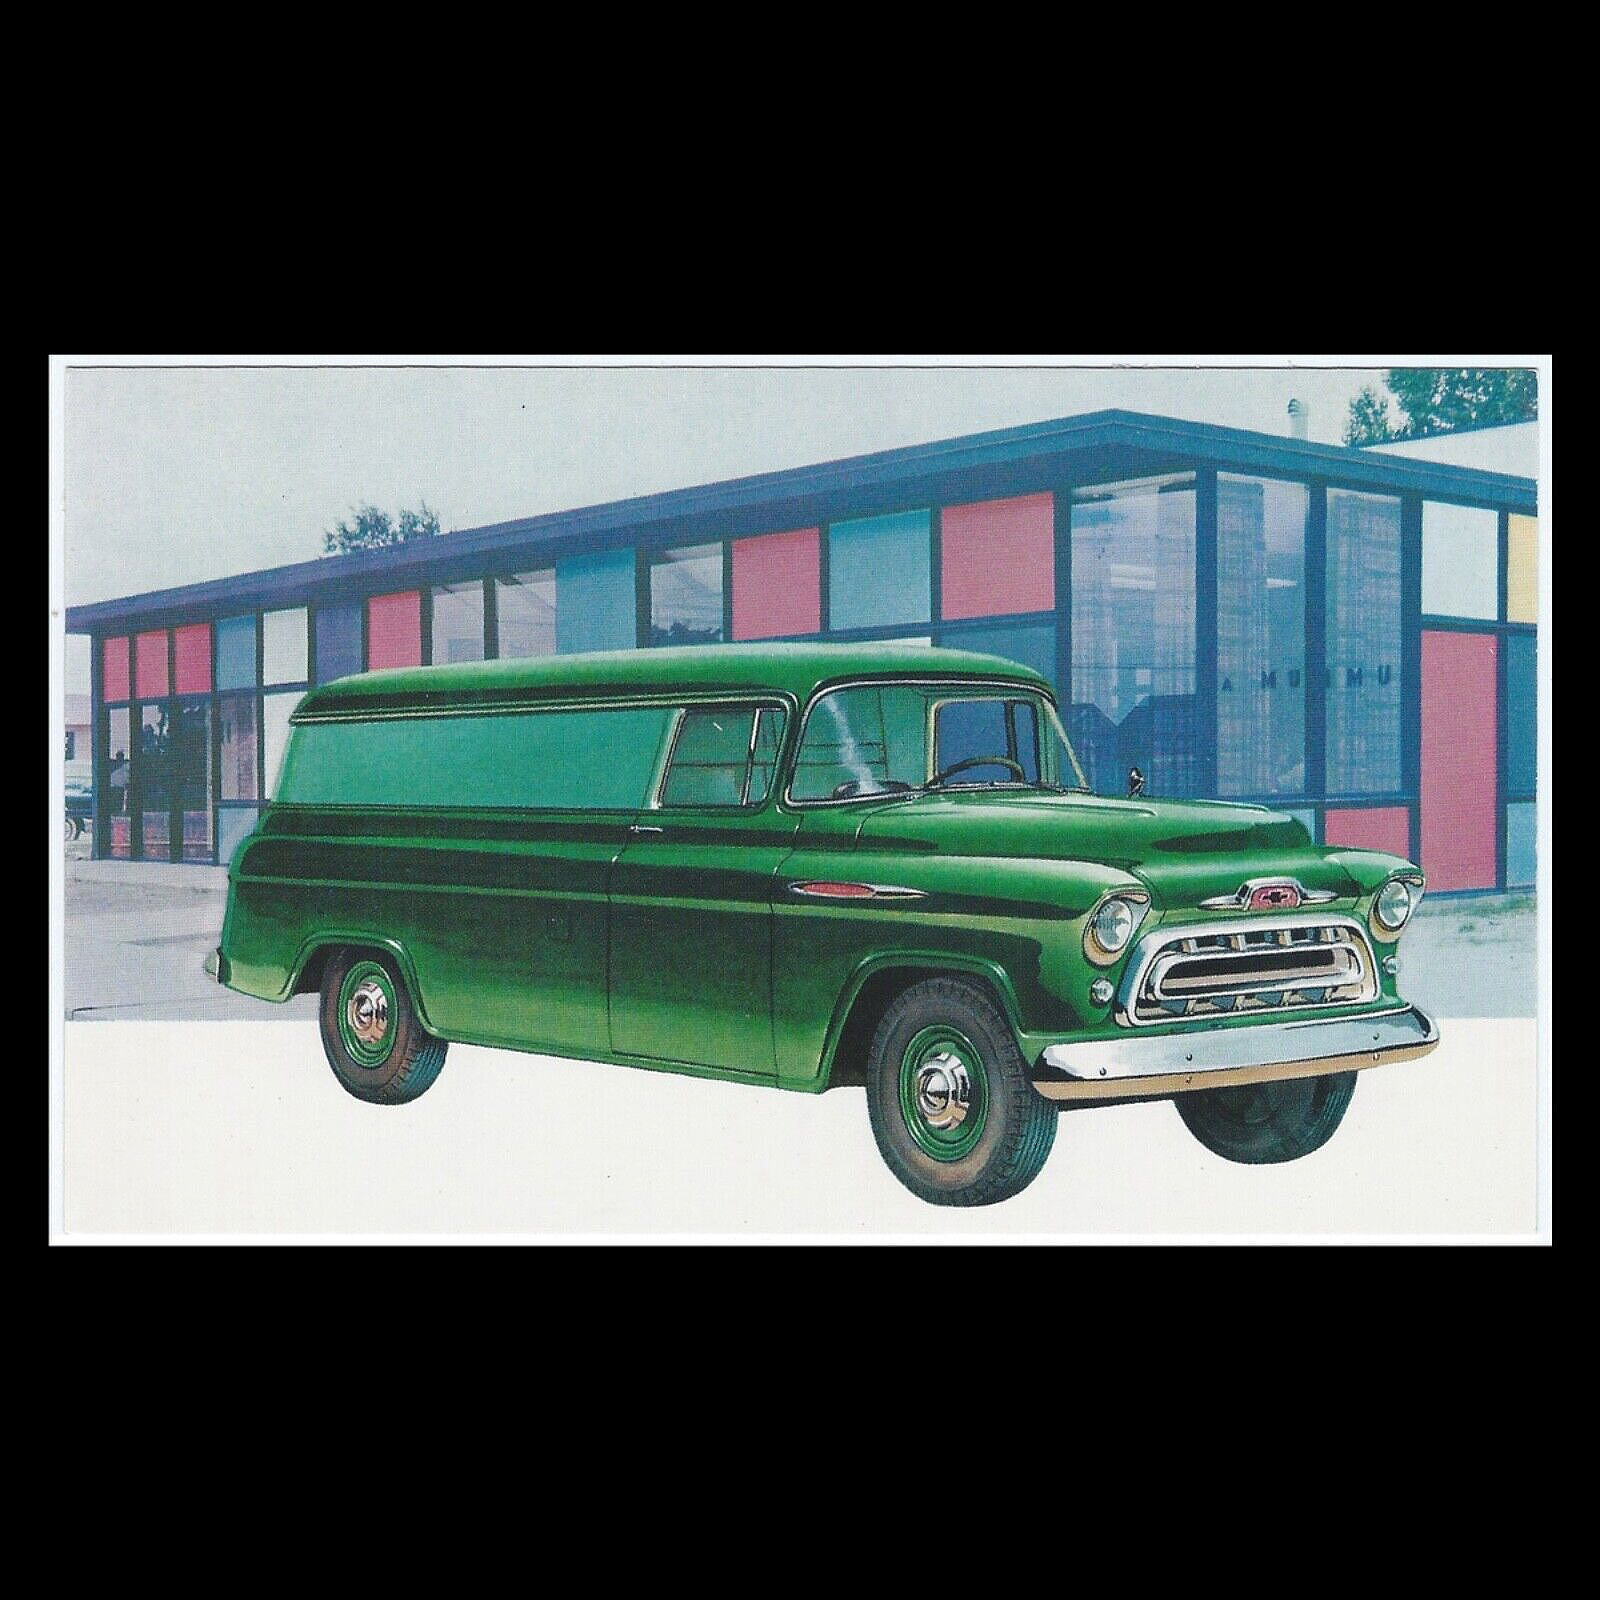 1957 Chevrolet PANEL VAN: Original Dealer Promotional Postcard UNUSED VG+/Ex